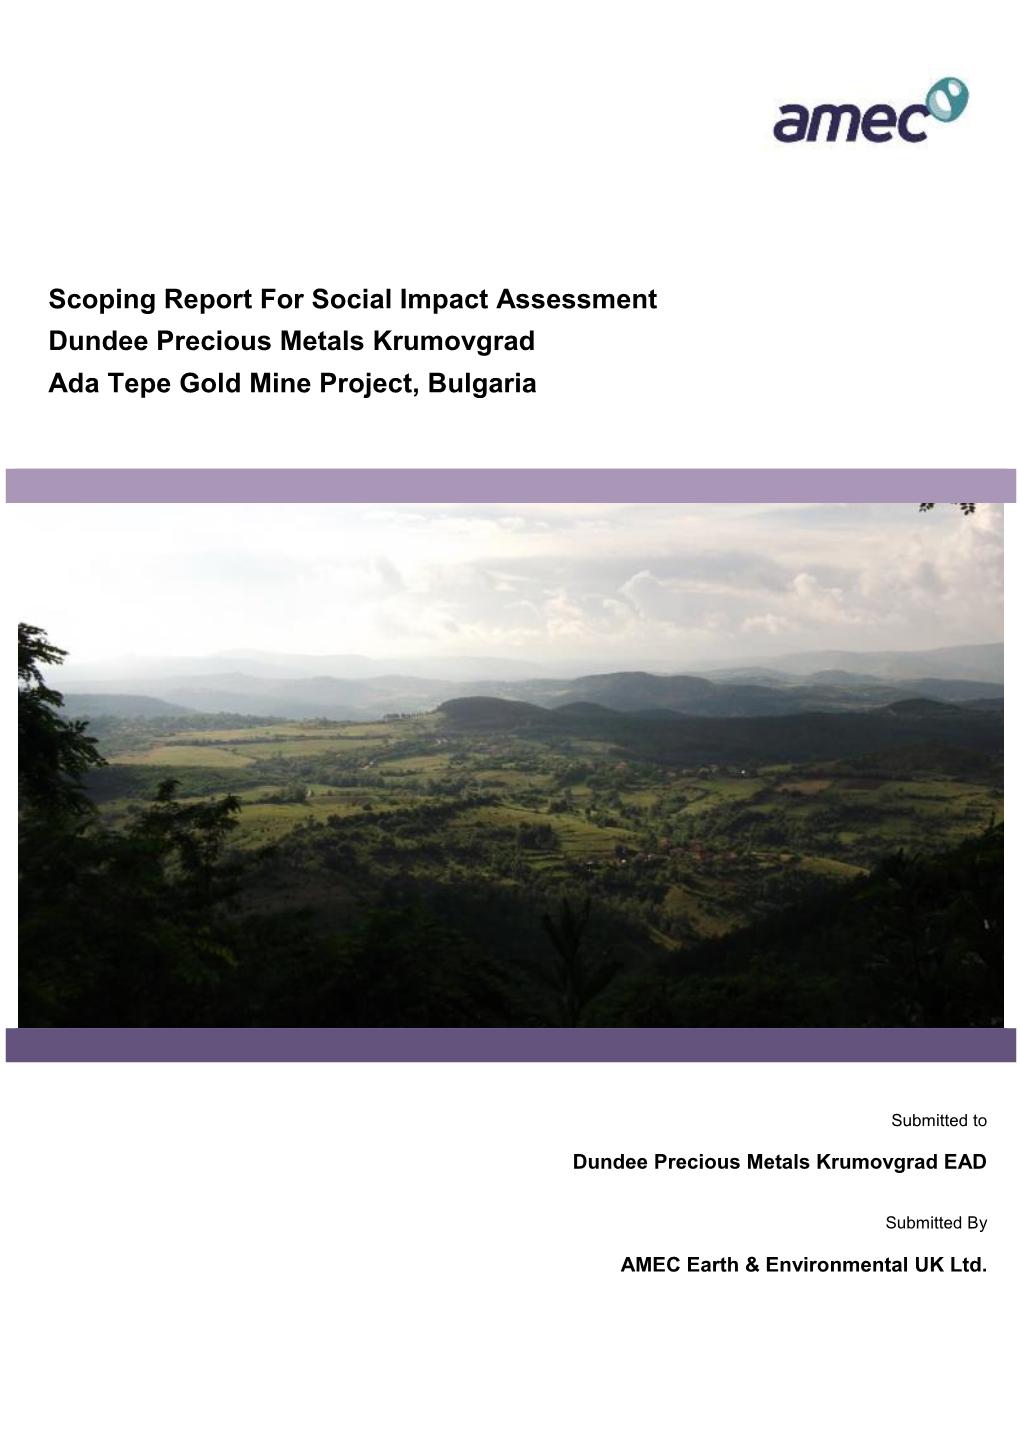 Scoping Report for Social Impact Assessment Dundee Precious Metals Krumovgrad Ada Tepe Gold Mine Project, Bulgaria